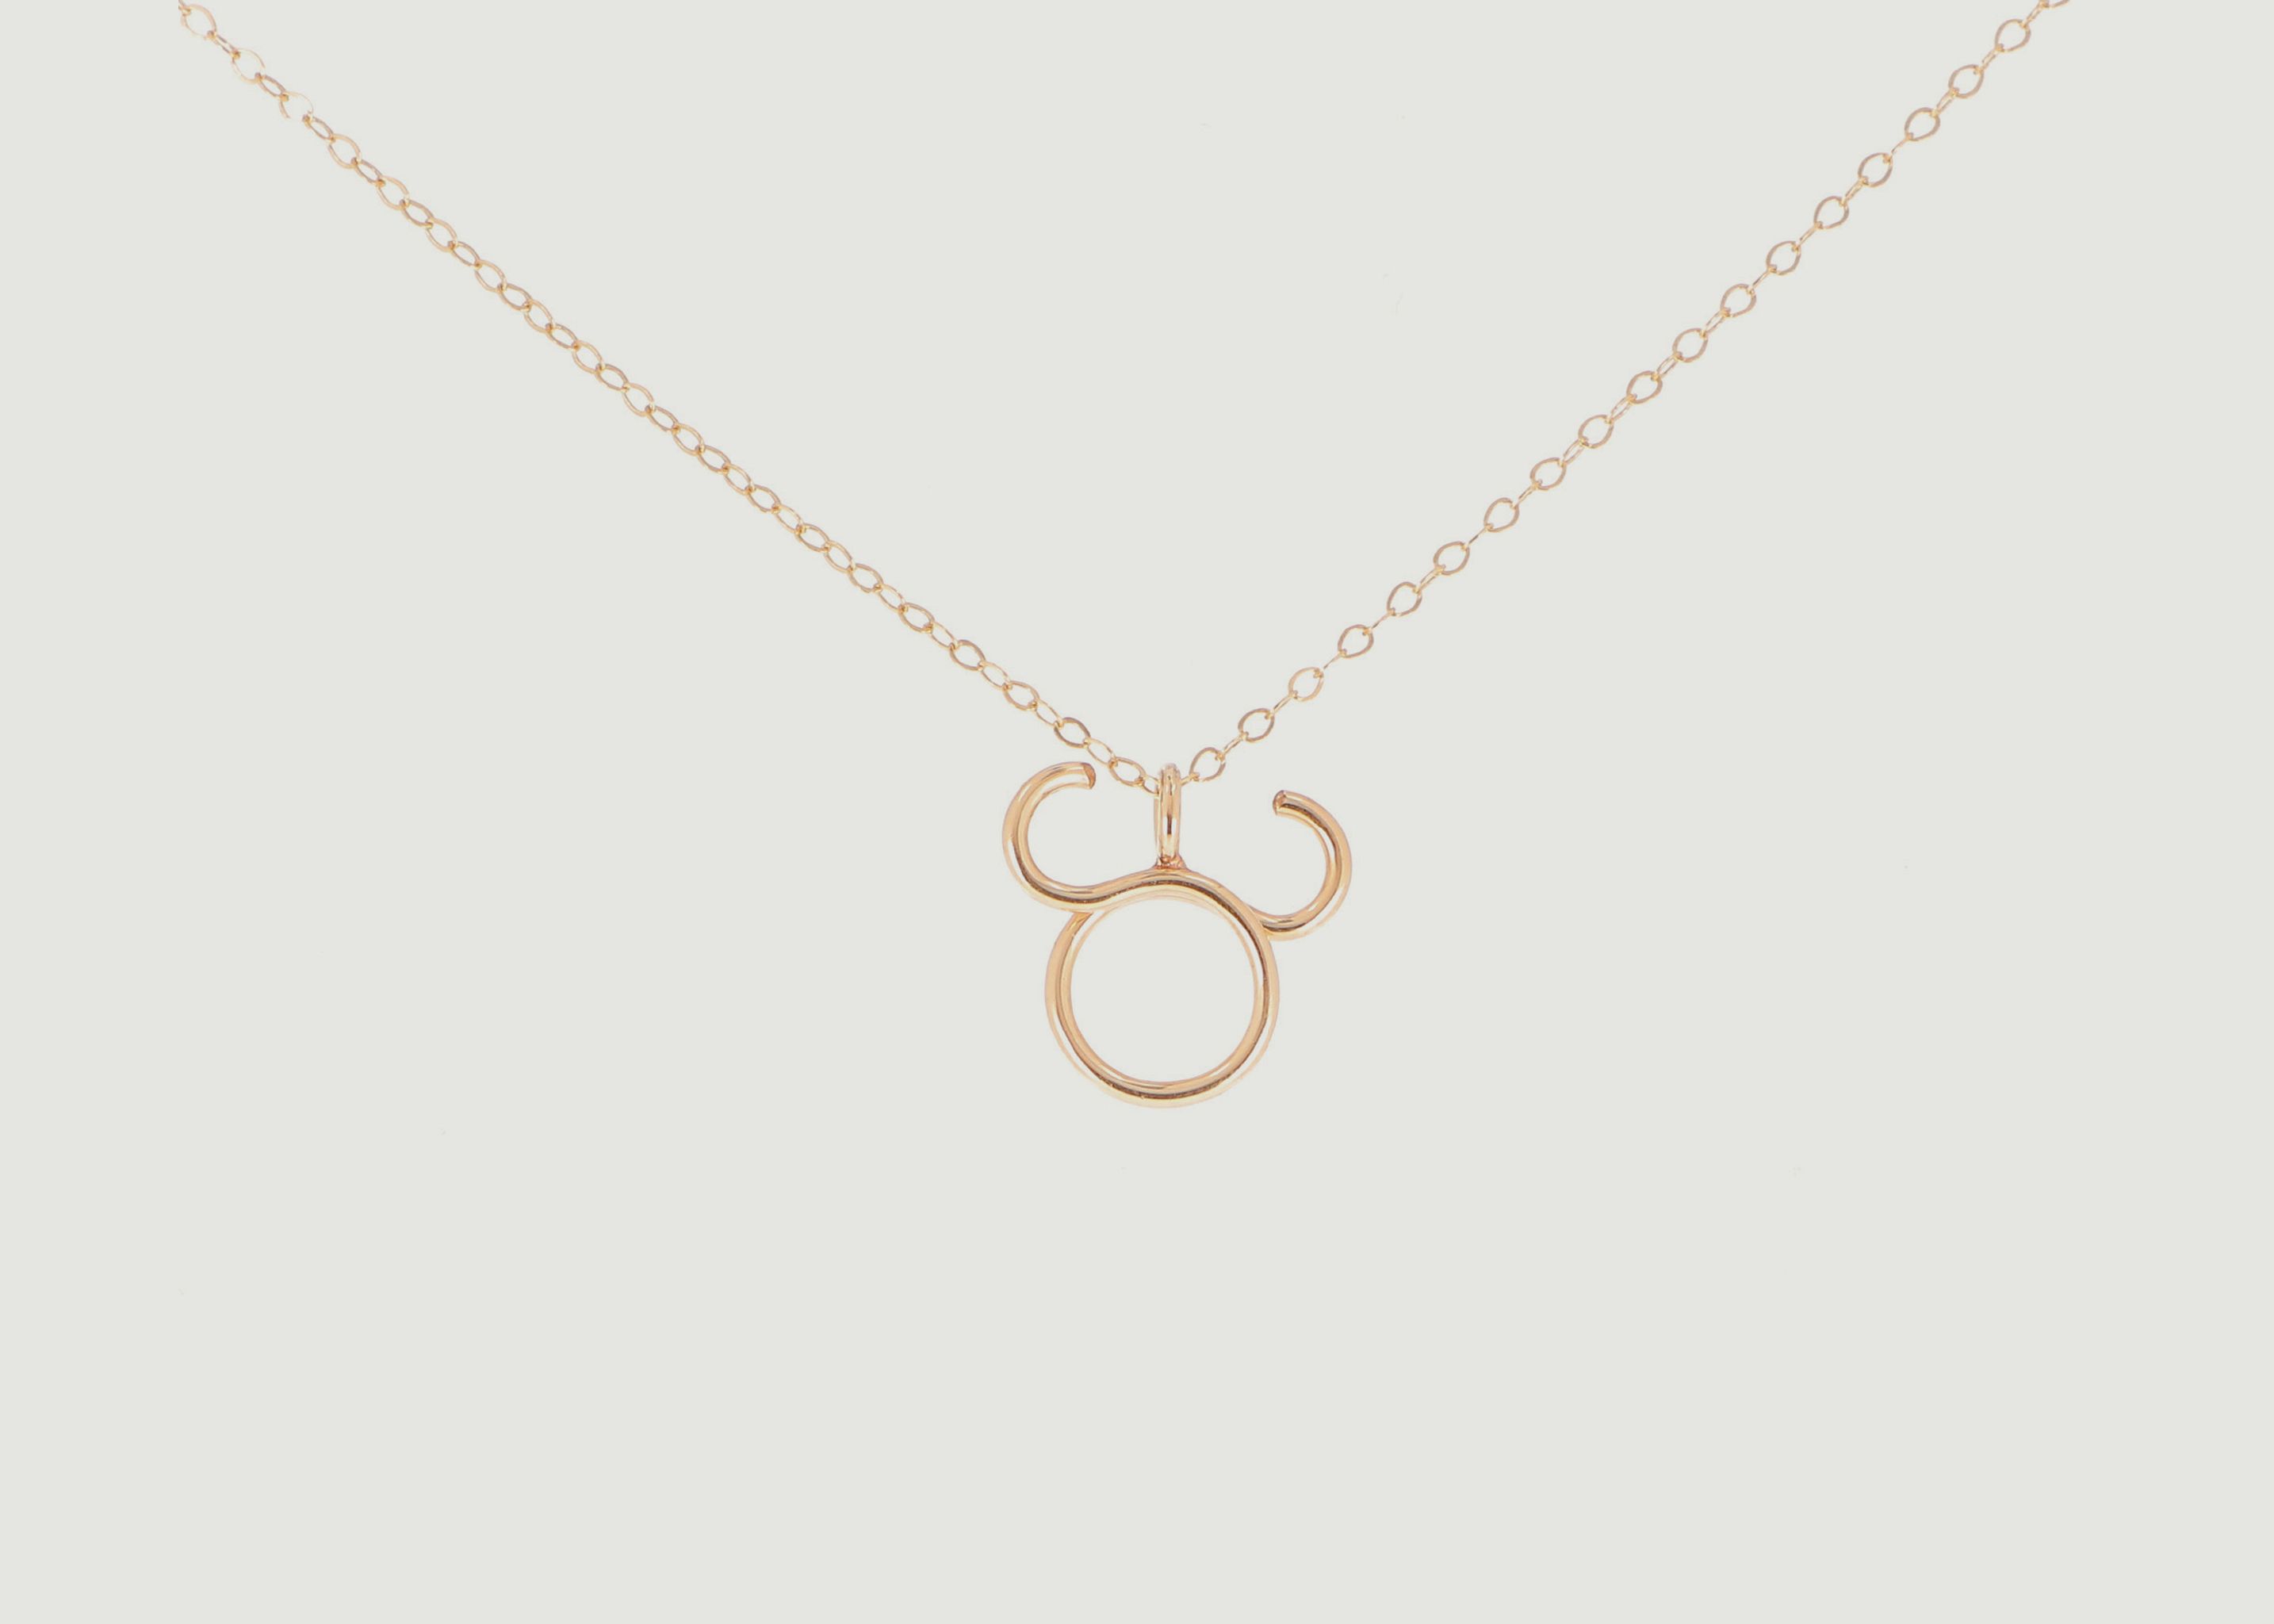 Astro Taureau chain necklace with pendant - Atelier Paulin